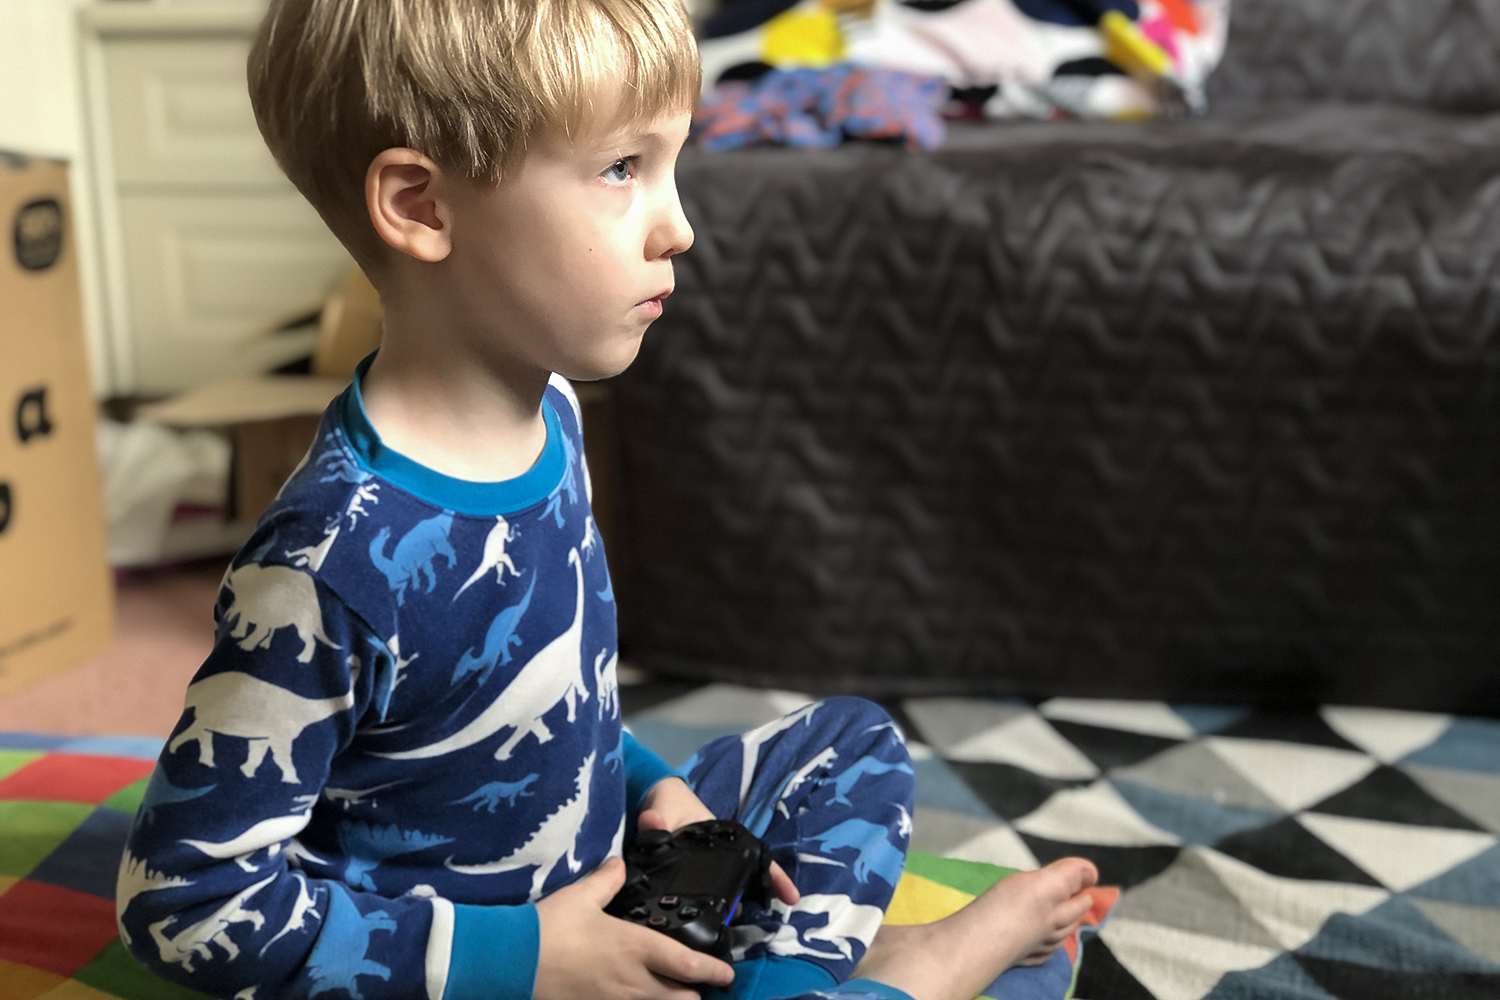 Gabe playing video games in his pyjamas